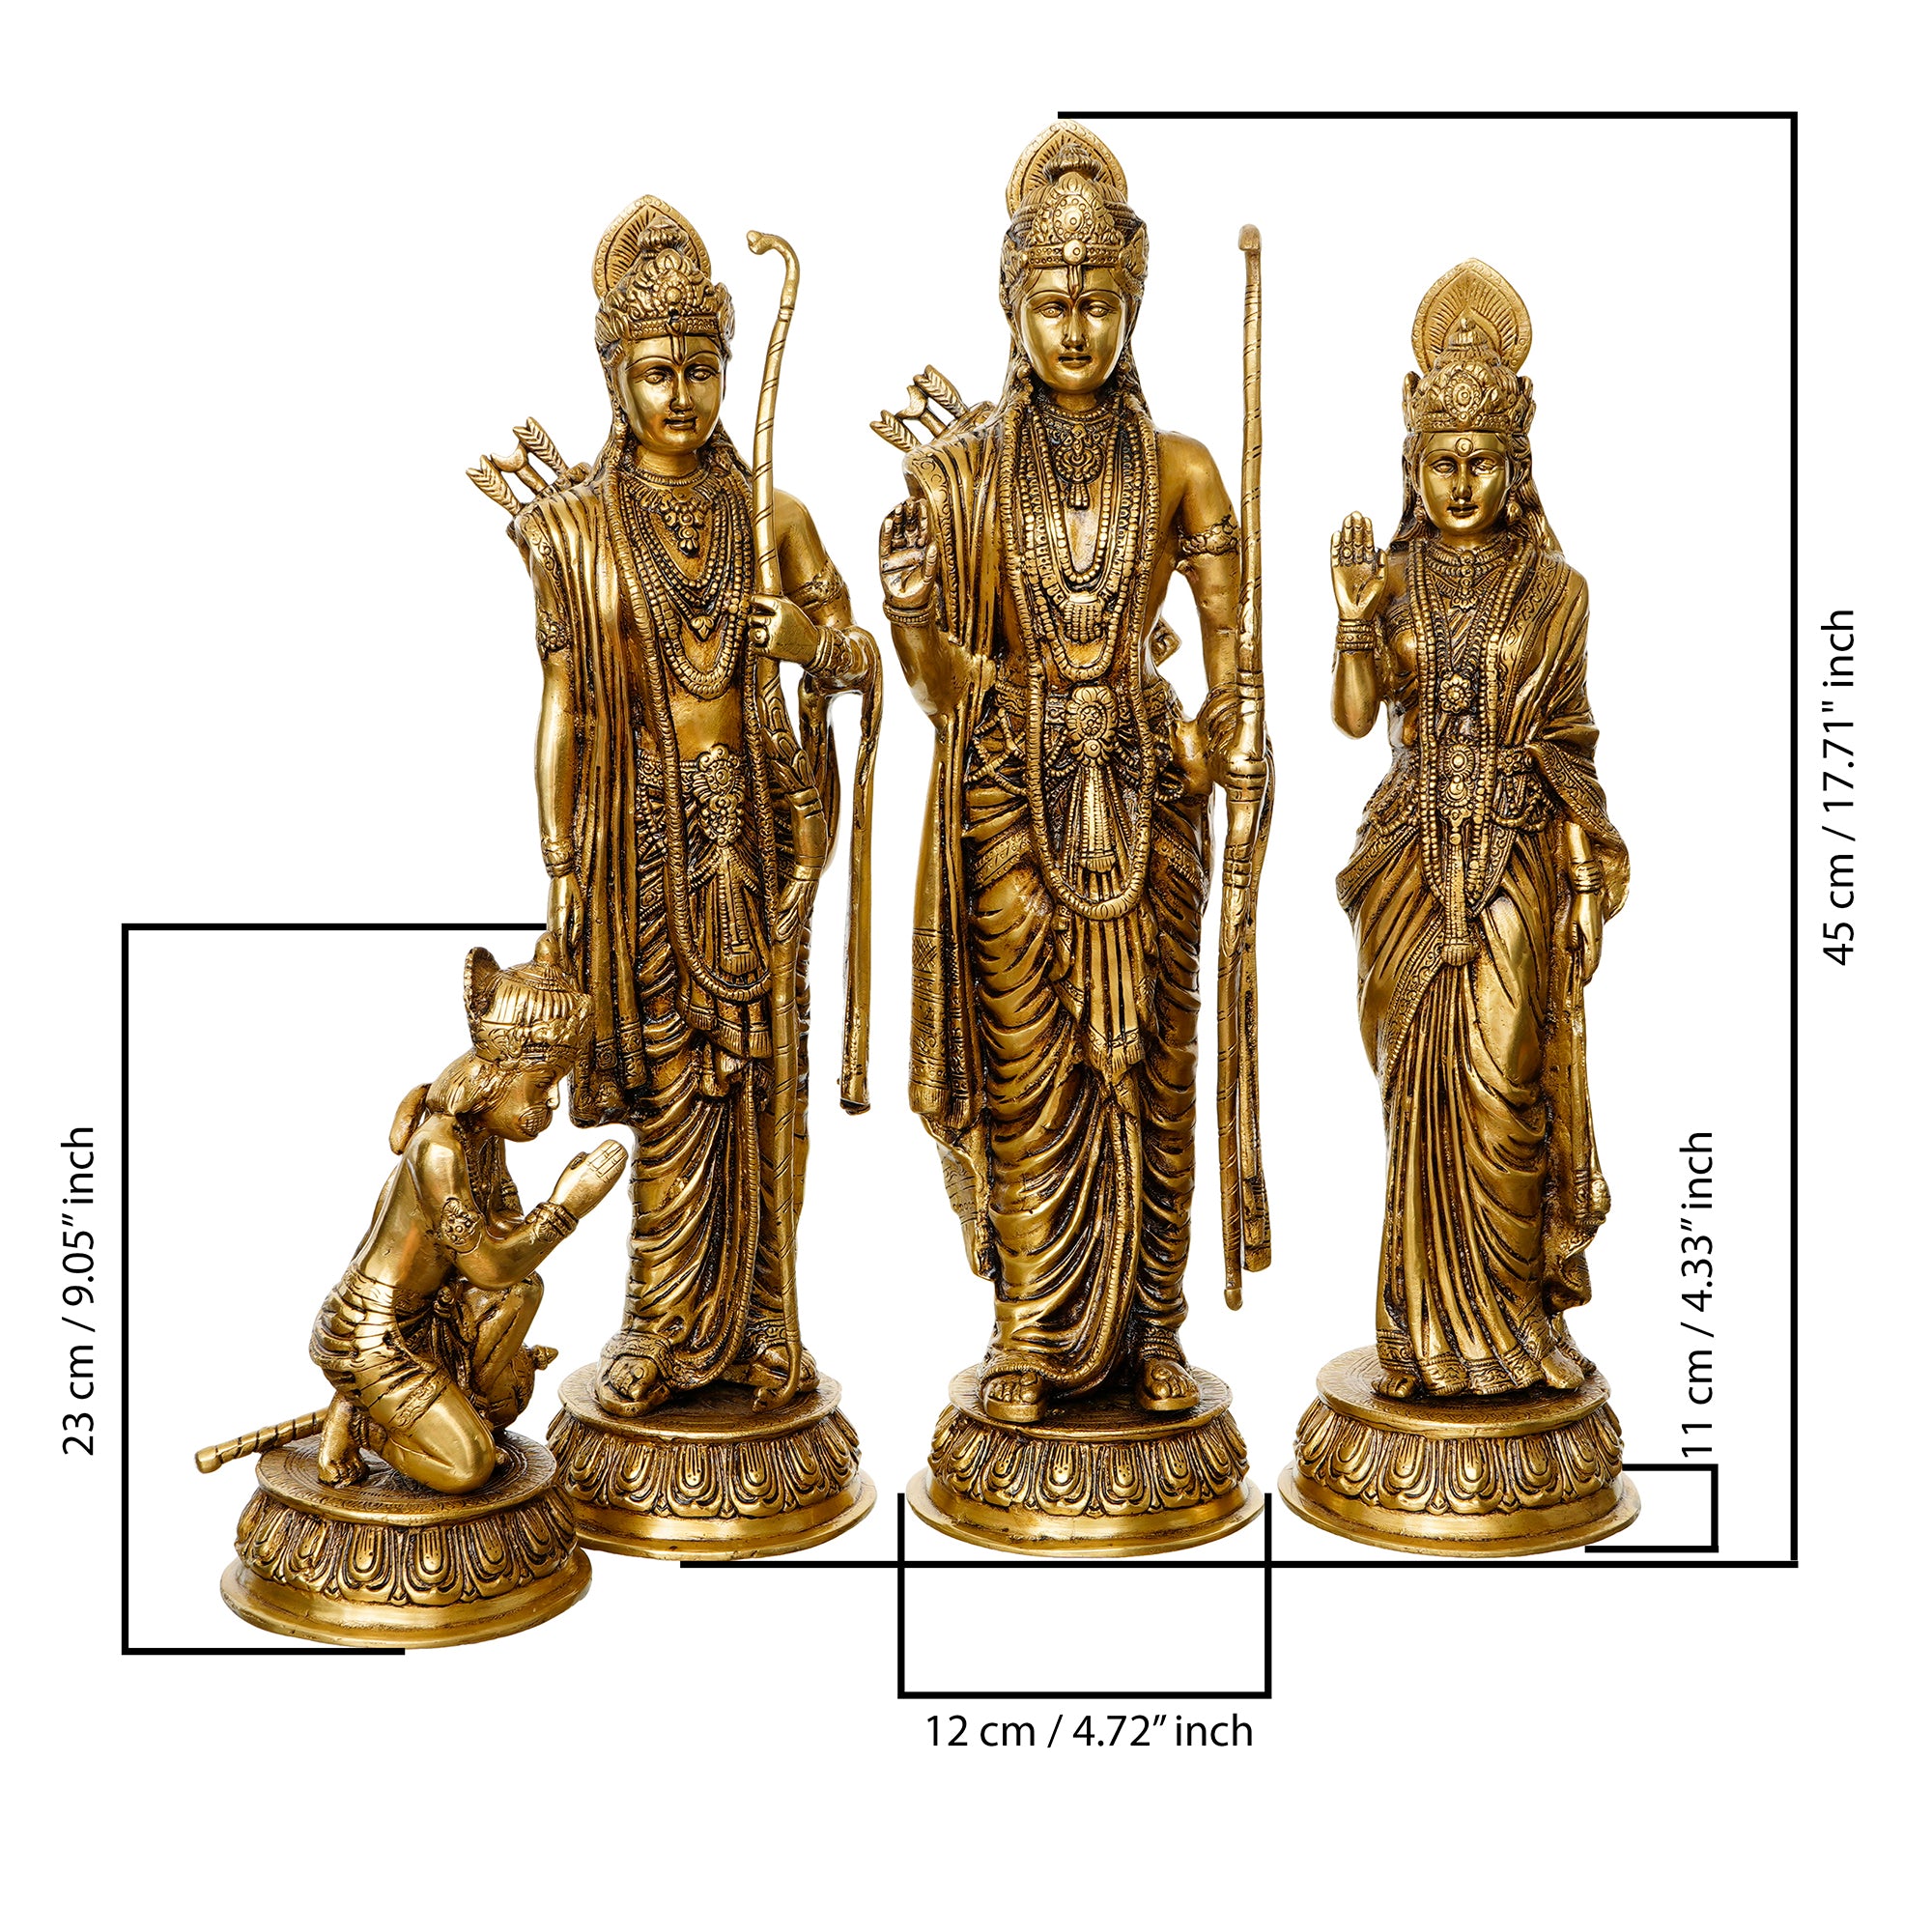 Golden Brass Handcrafted Ram Darbar - Lord Ram, Sita and Laxman Along With Lord Hanuman Idols 3